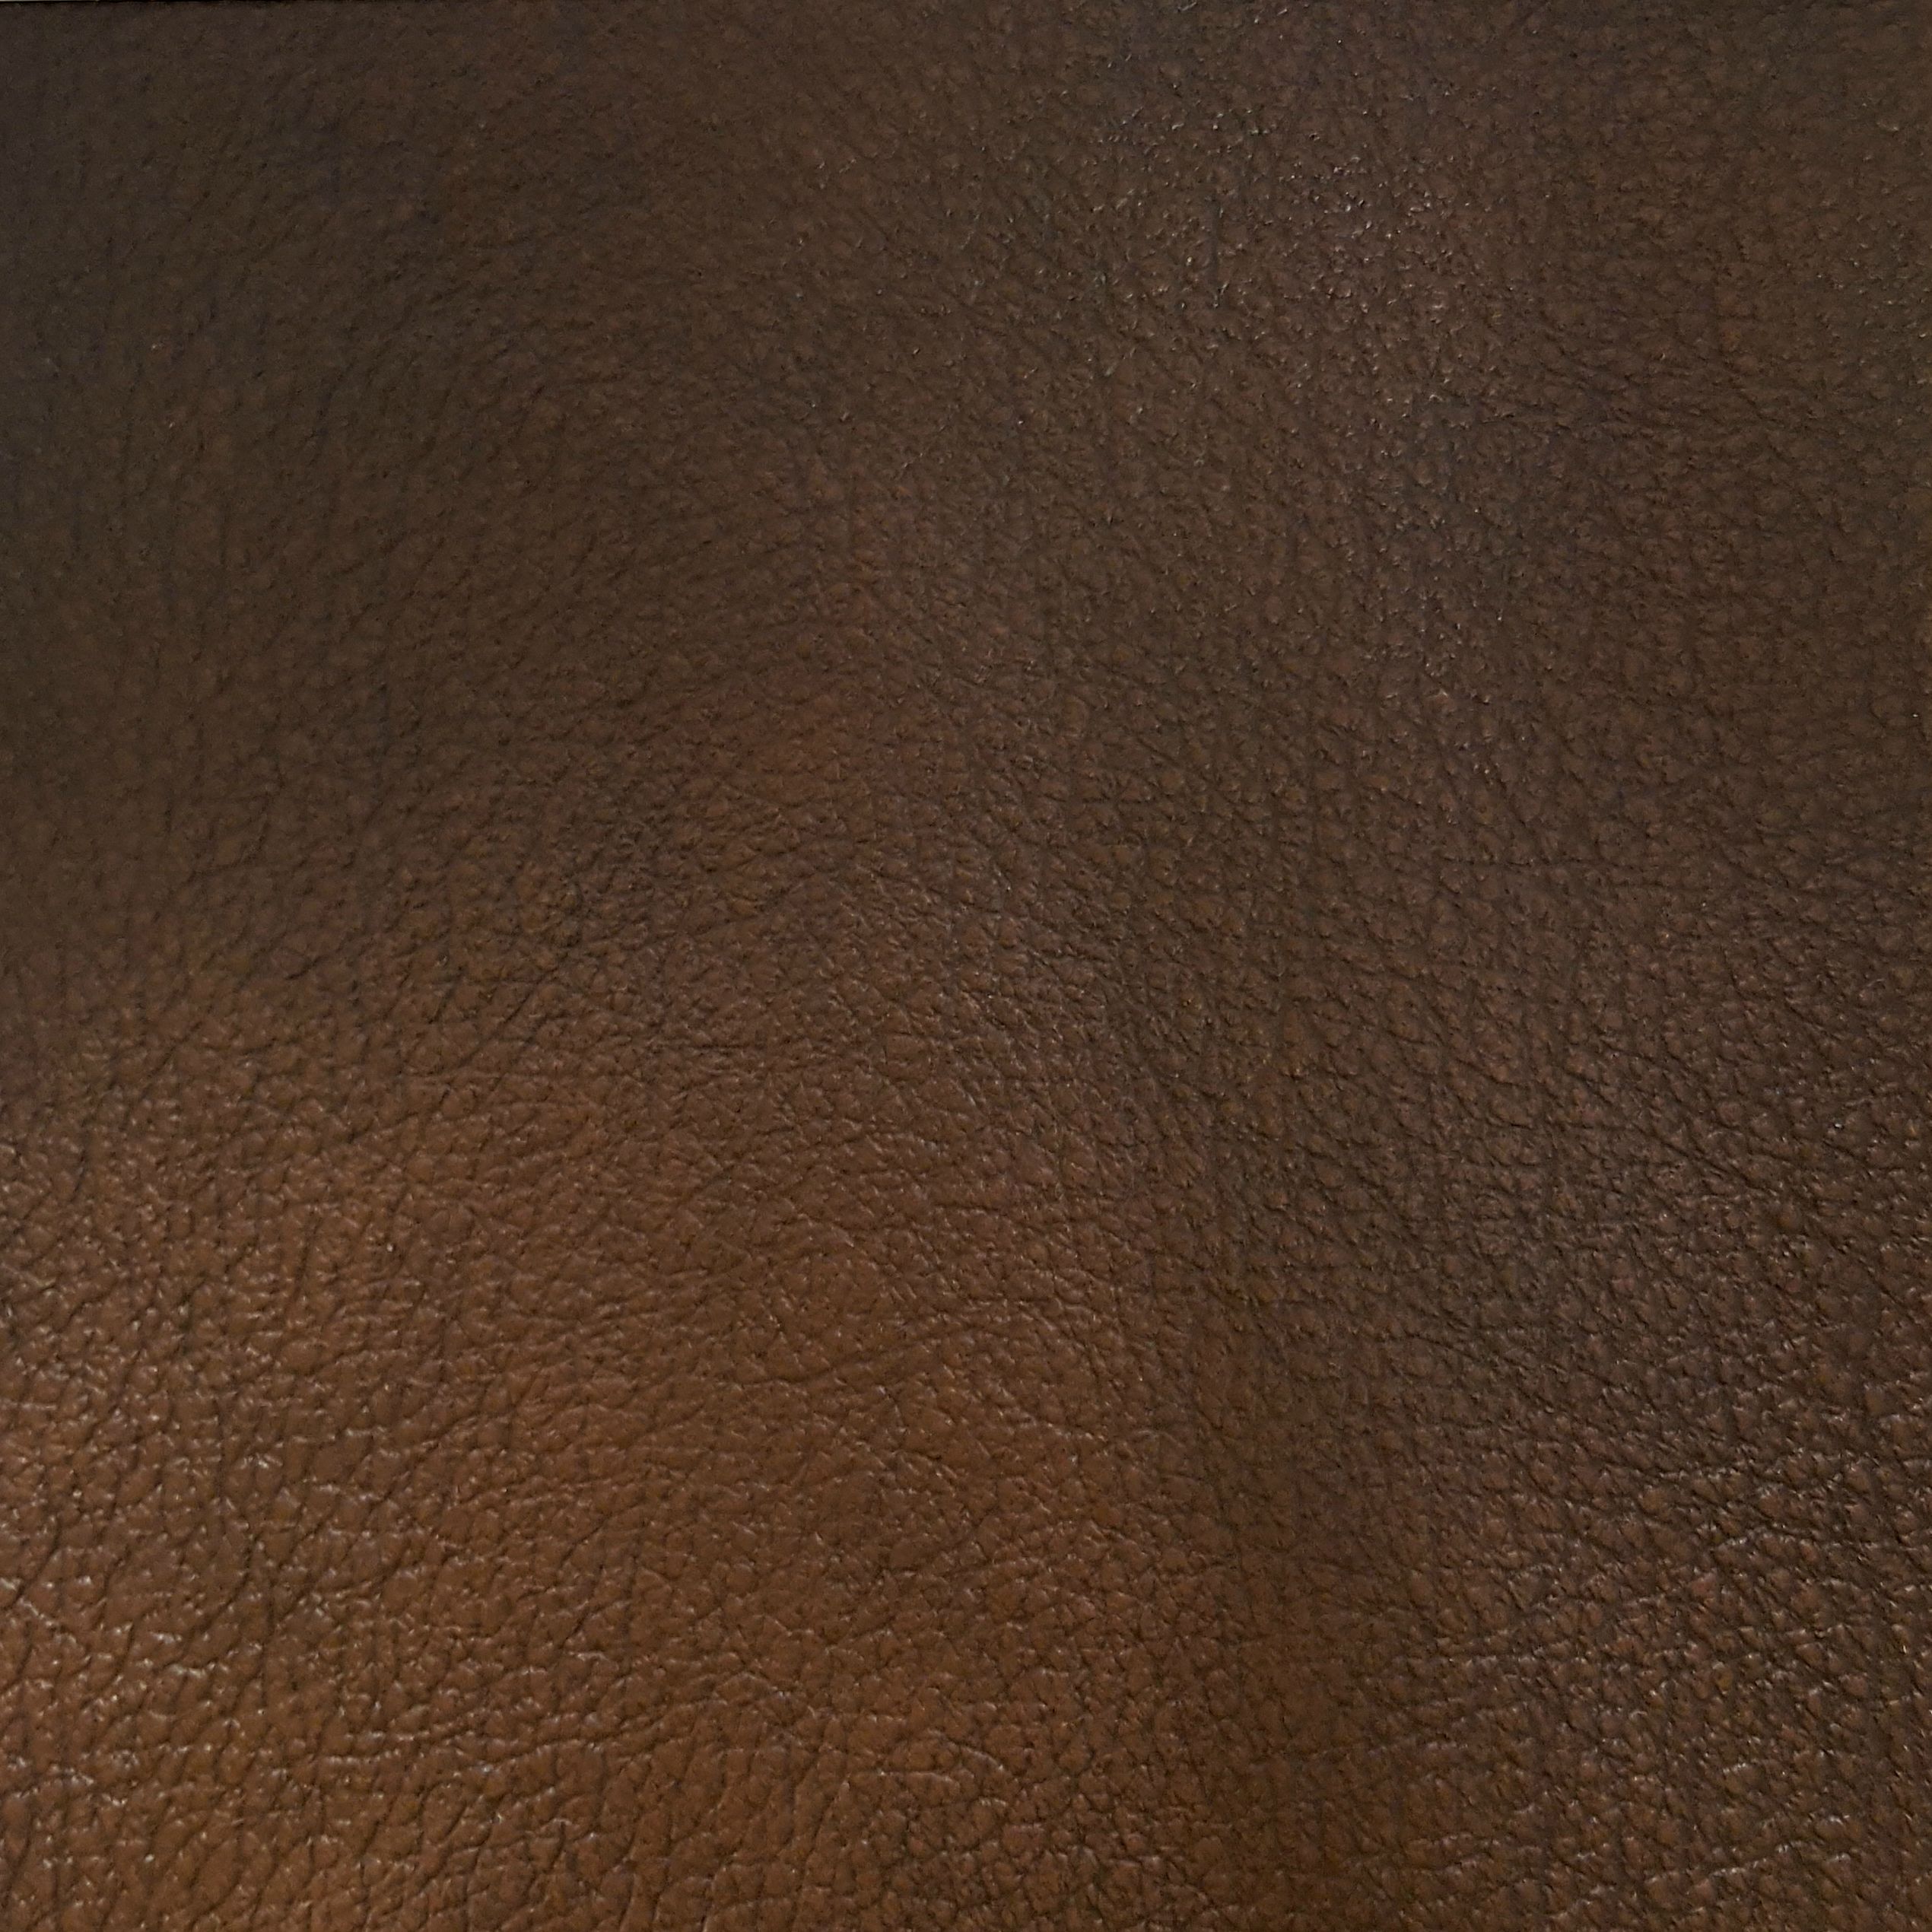 Austin 4-piece Top Grain Leather Set | My online store dba Expo Int'l